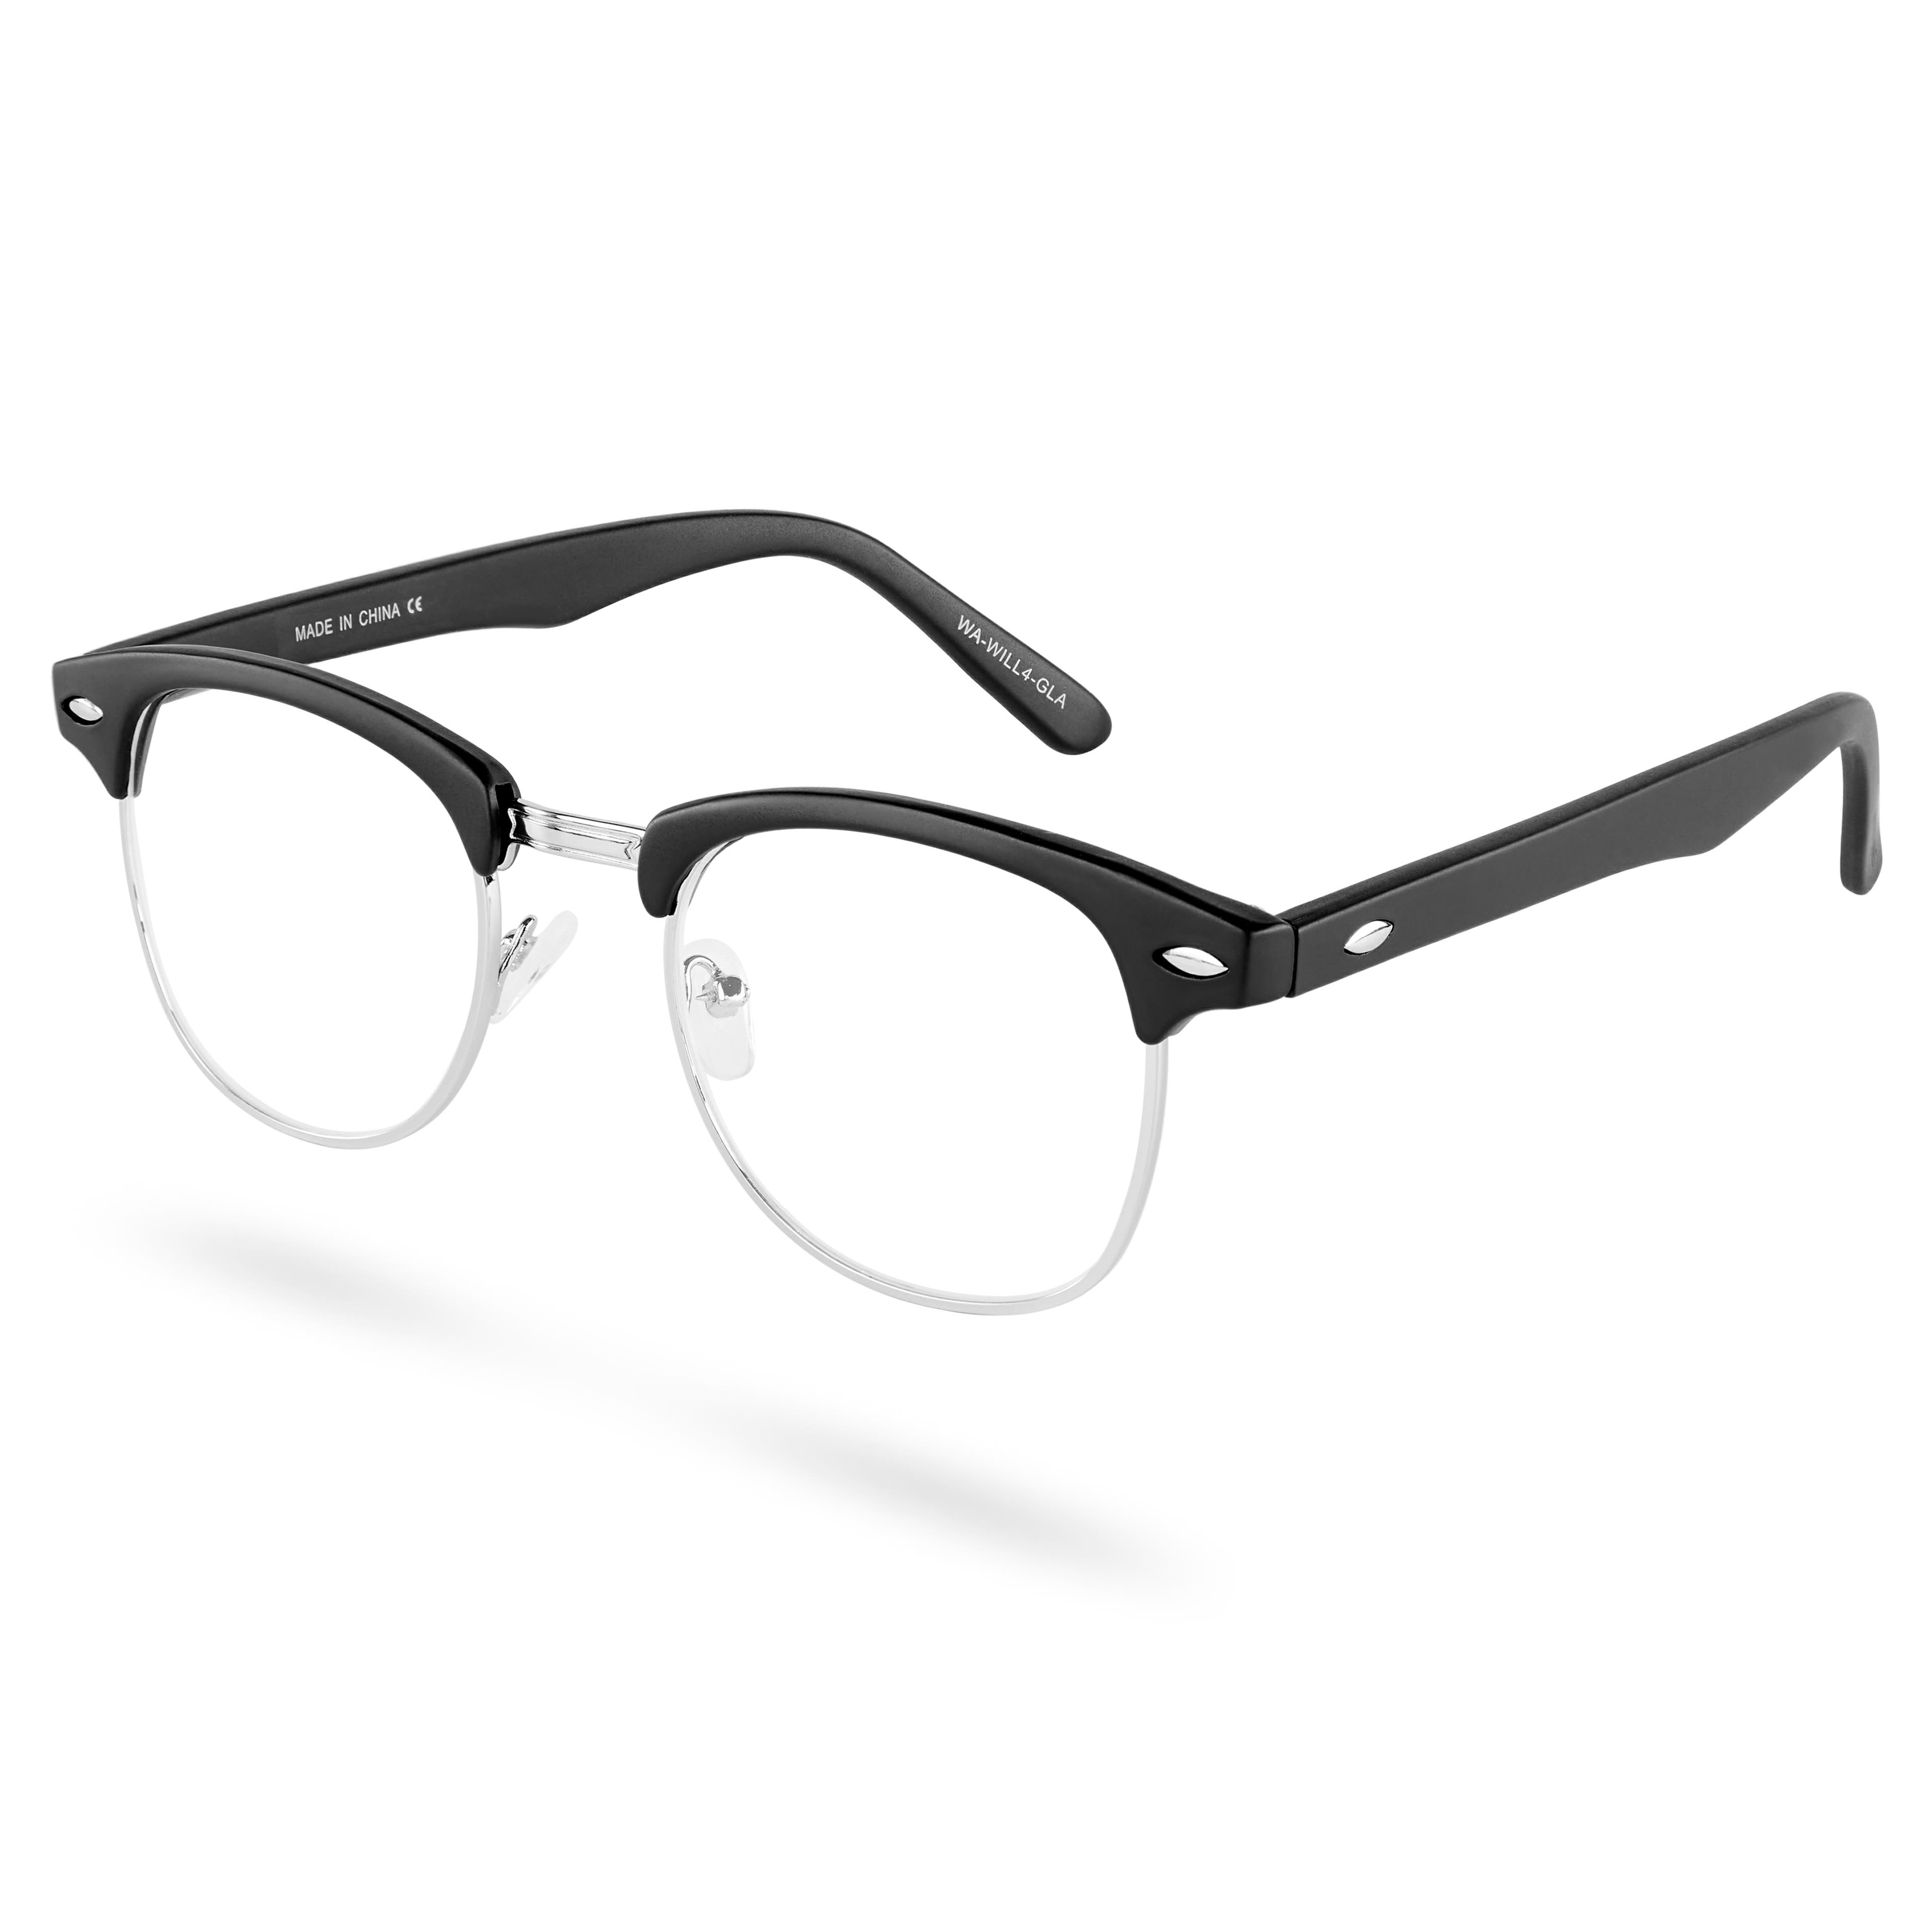 Browline очила с прозрачни стъкла Will